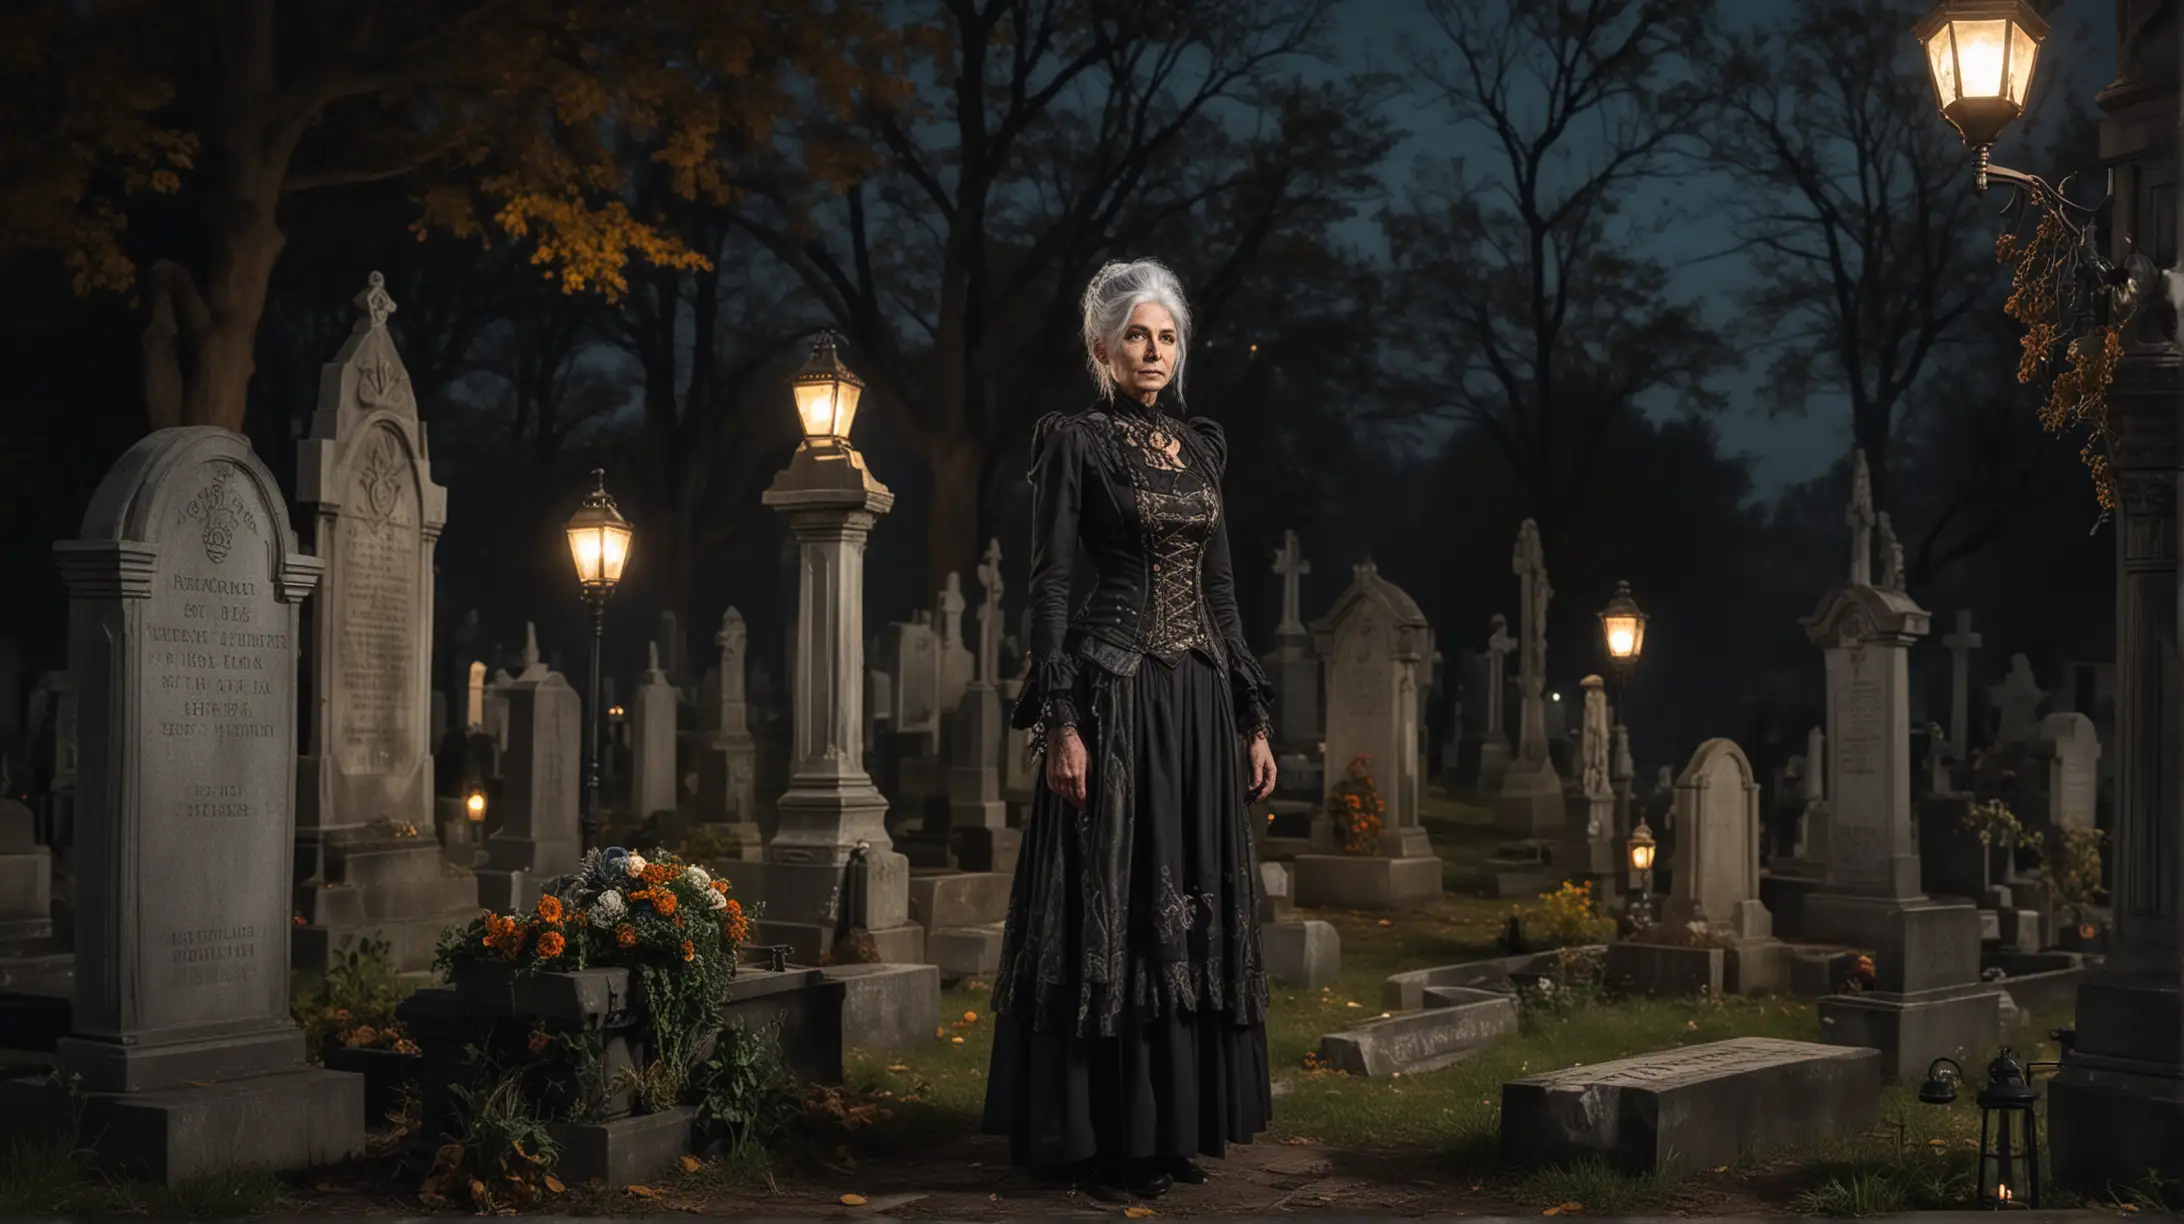 Elegant Steampunk Woman Visiting Old Graveyard Late at Night